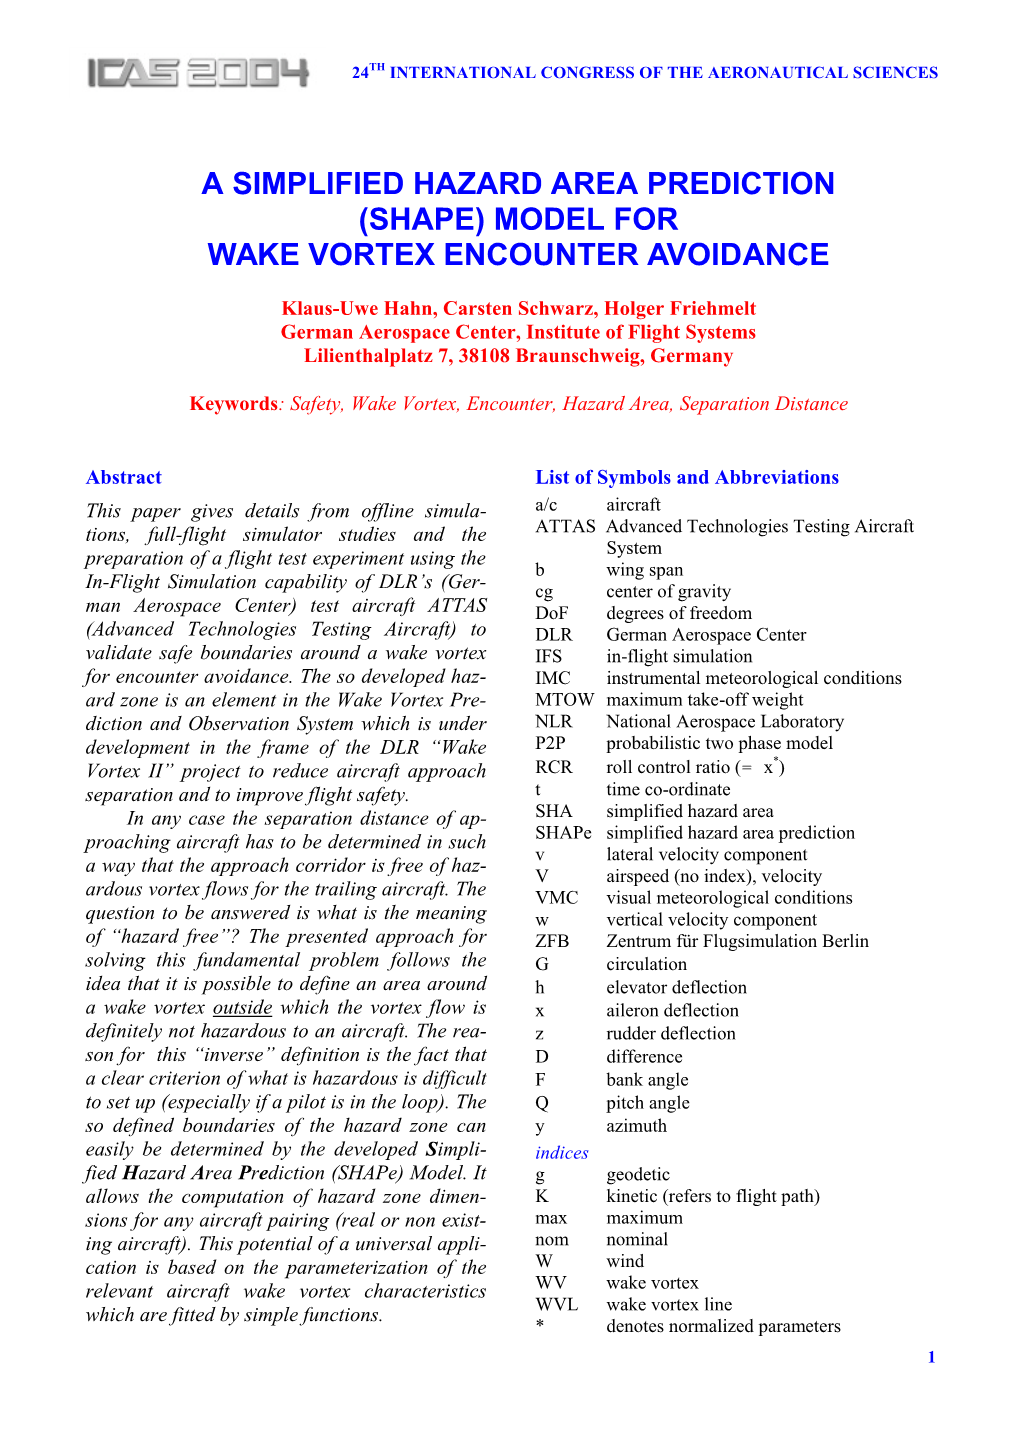 A Simplified Hazard Area Prediction (Shape) Model for Wake Vortex Encounter Avoidance